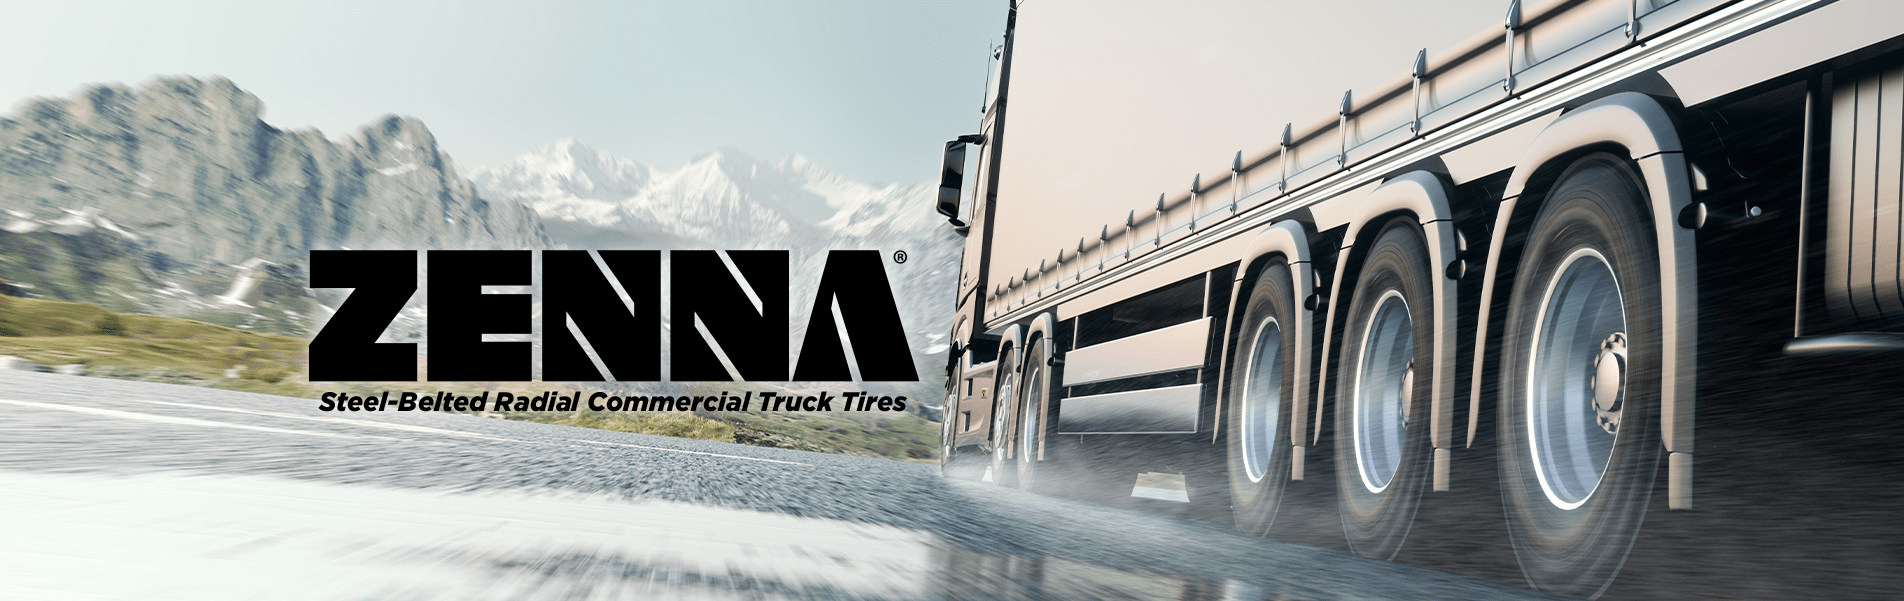 Zenna steel-belted commercial truck tires